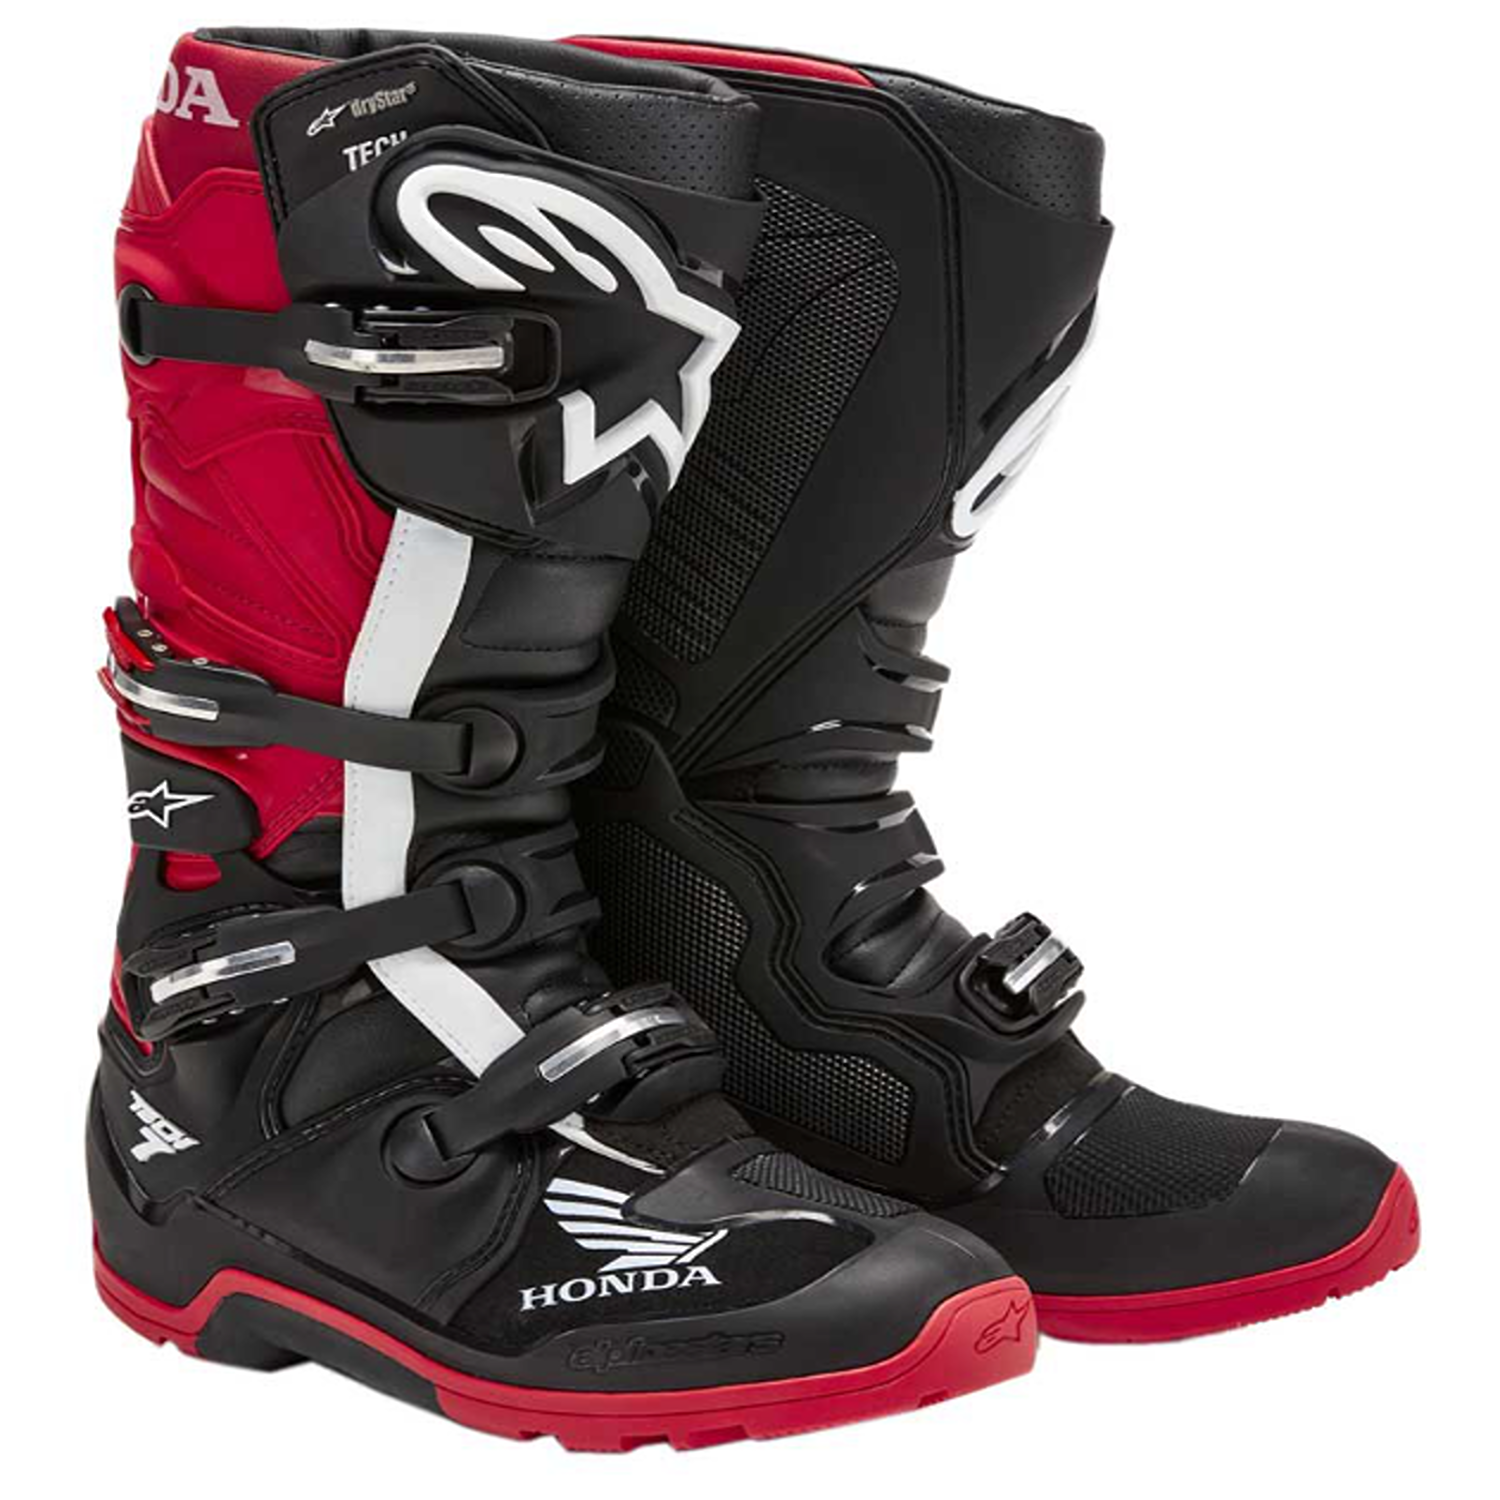 Image of Alpinestars Honda Tech 7 Enduro Drystar Boots Black Bright Red Size US 10 ID 8059347155524